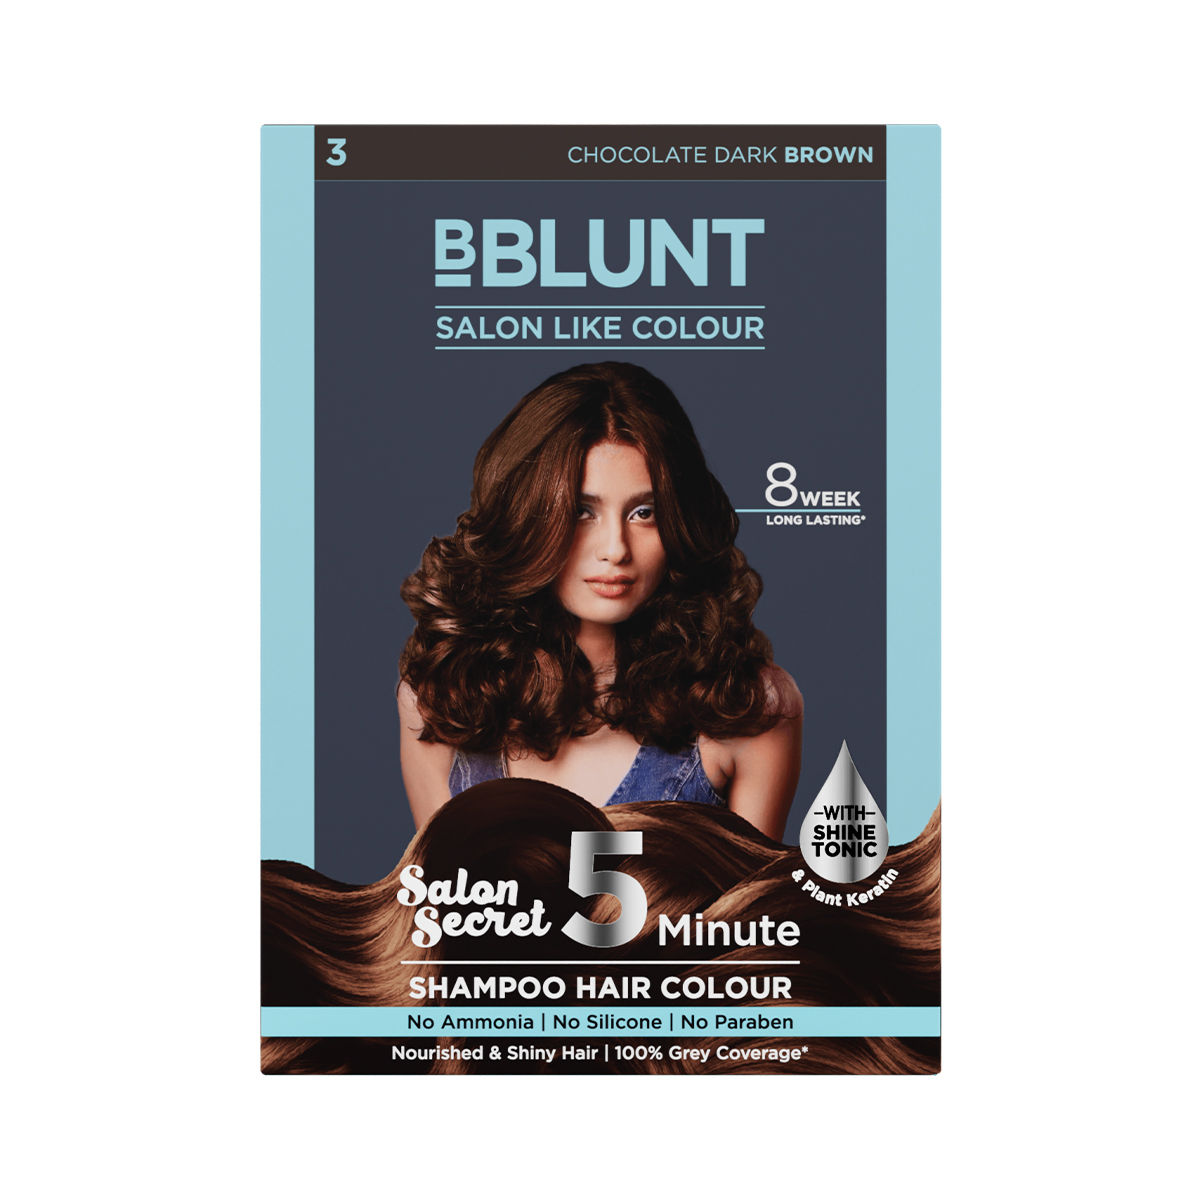 Bblunt Chocolate Dark Brown 5 Minute Shampoo Hair Colour For 100 Percentage Grey Coverage 20ml X 5 2 Display 1681708175 E21cacc1 